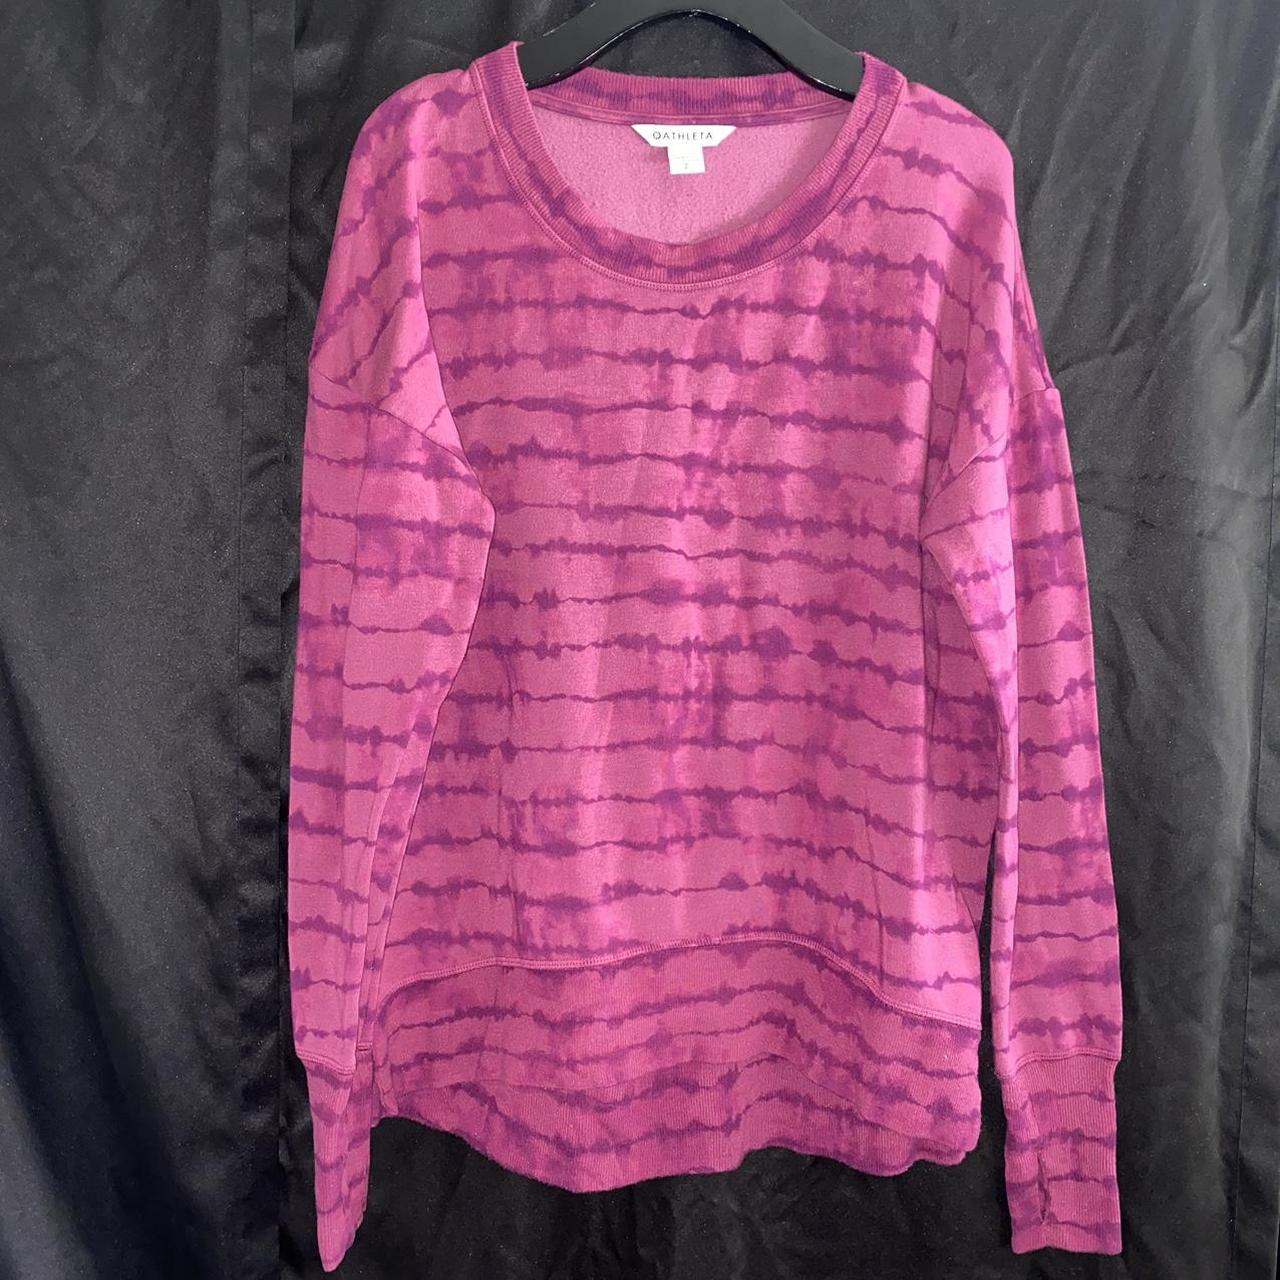 Athleta Women's Tie Dye Leggings Crewneck Sweater Purple Gray Size S M -  Shop Linda's Stuff